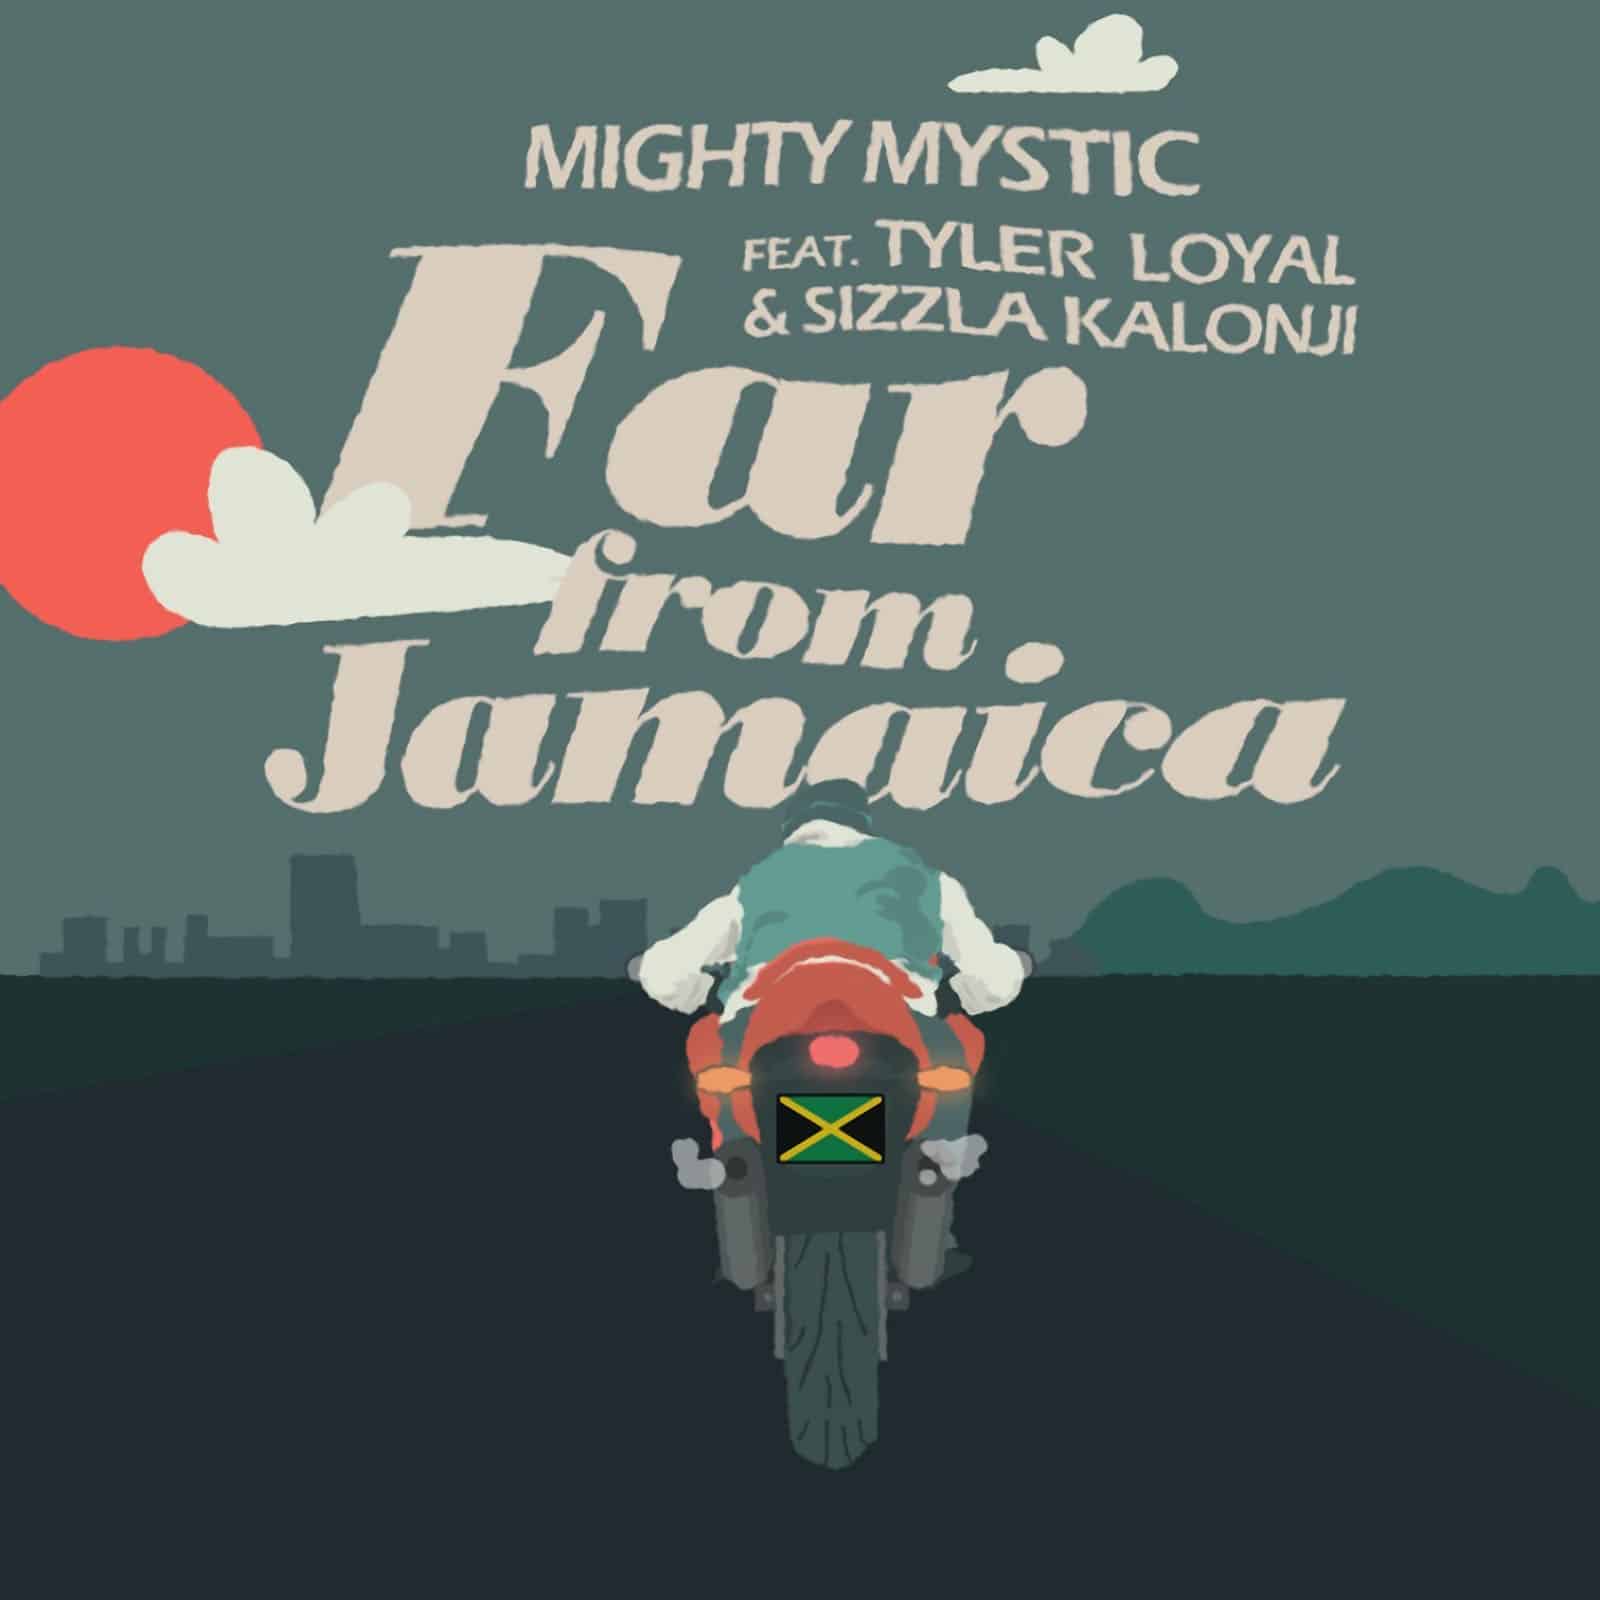 Mighty Mystic "Far From Jamaica" FT Sizzla & Tyler Loyal